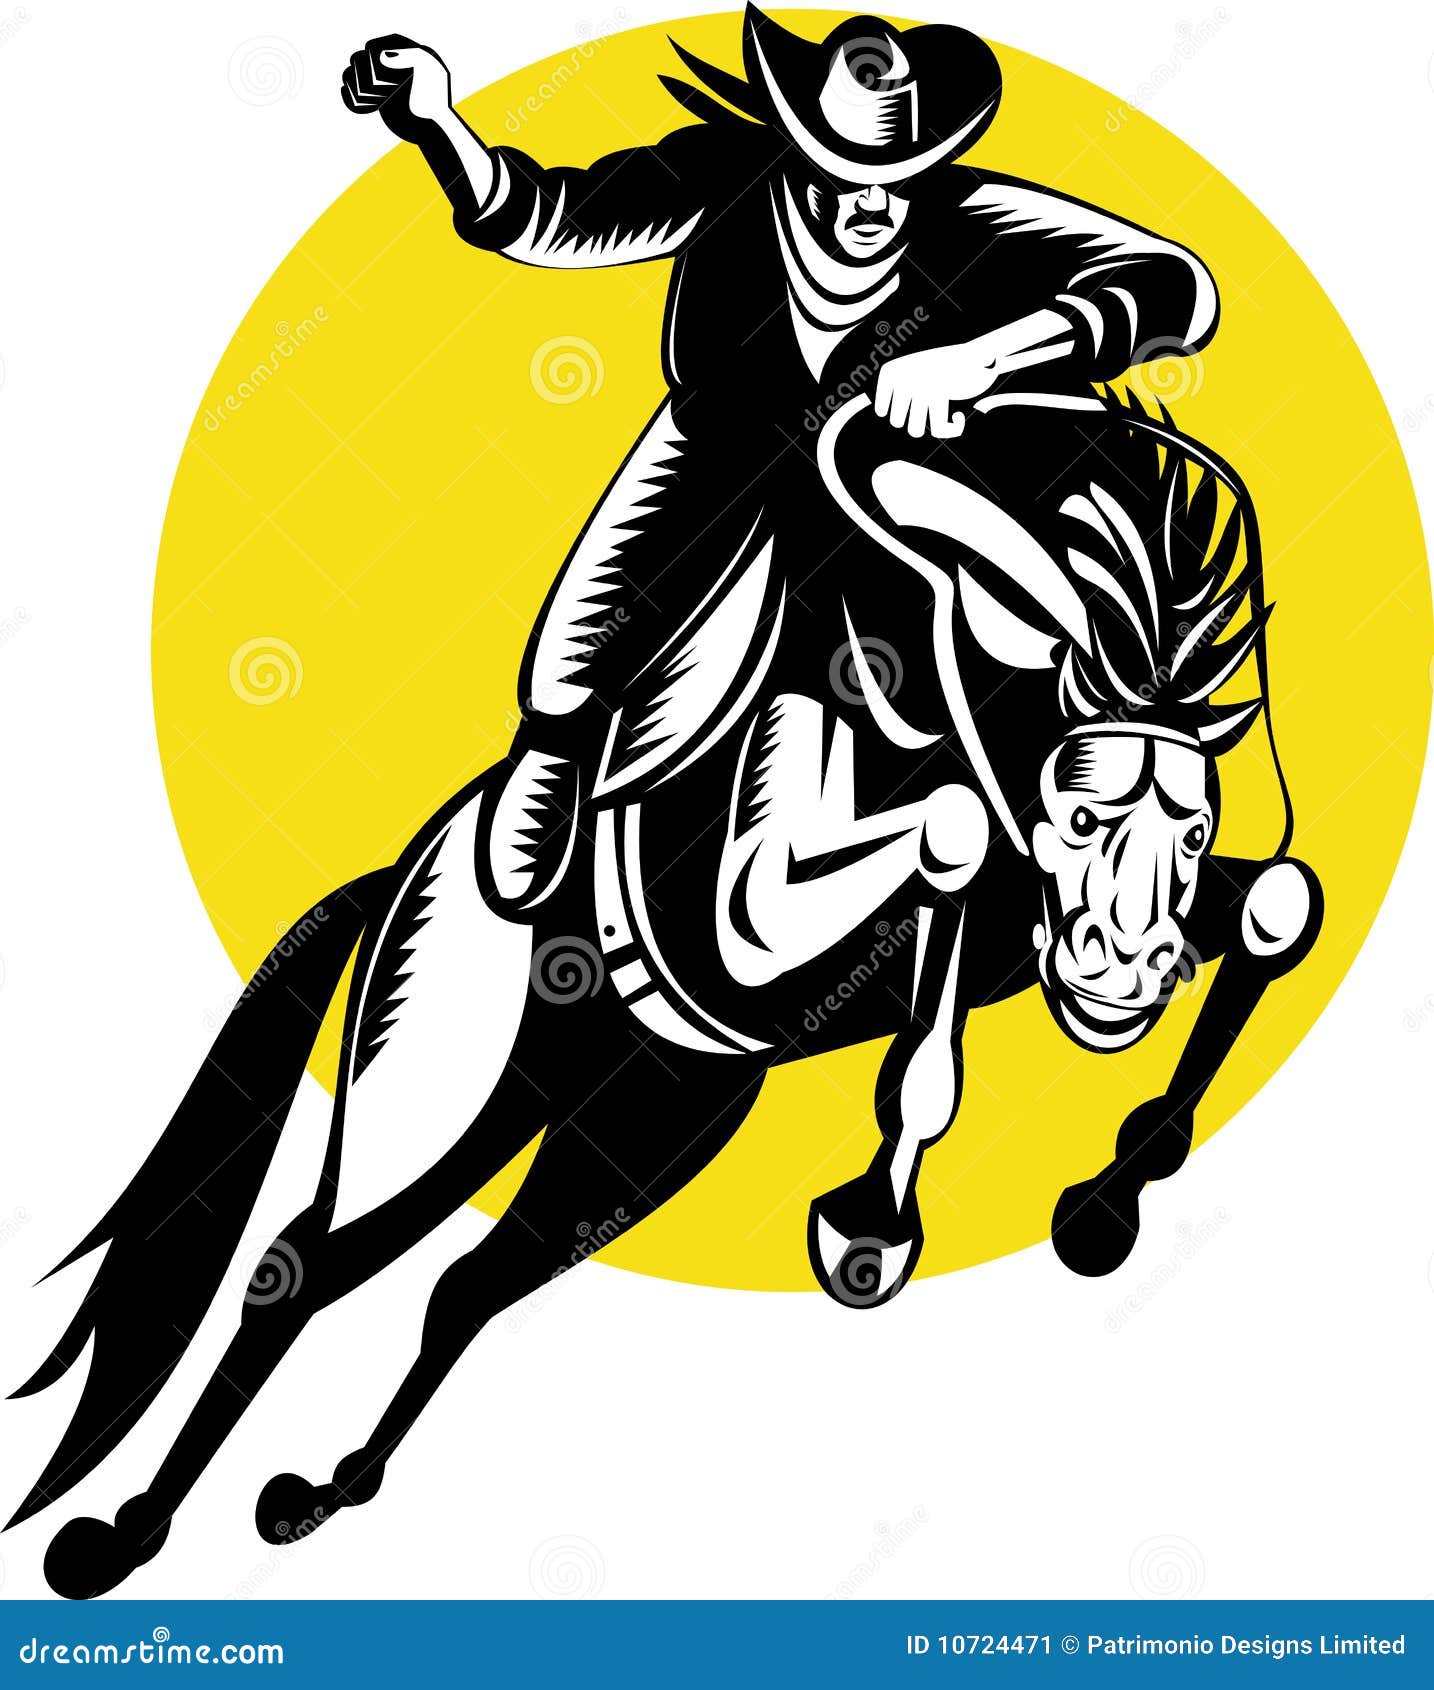 cowboy riding a bucking bronco